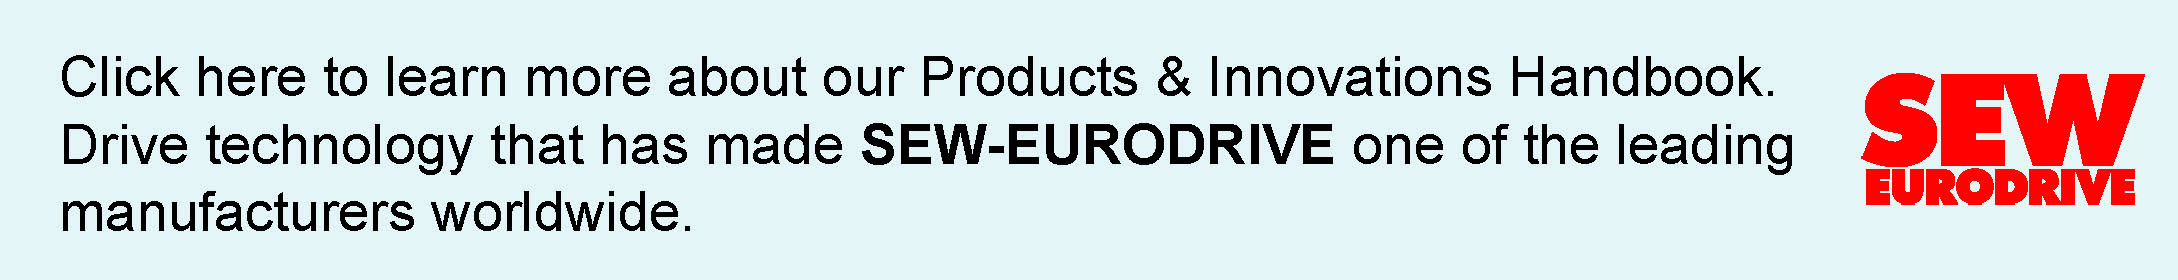 SEW Eurodrive Products & Innovations Handbook